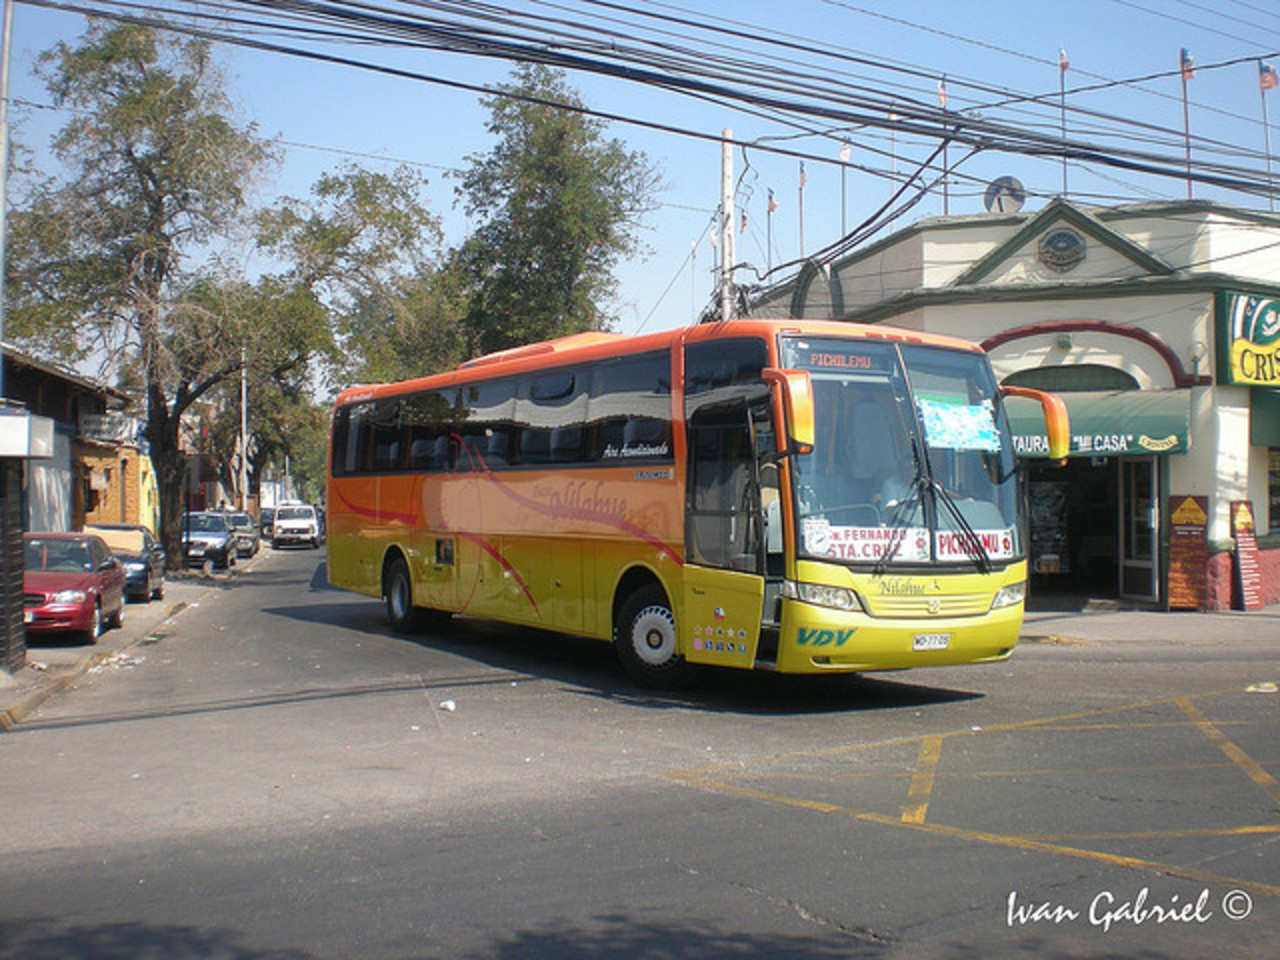 Buses Nilahue / Busscar Visstabuss Lo | Flickr - Photo Sharing!